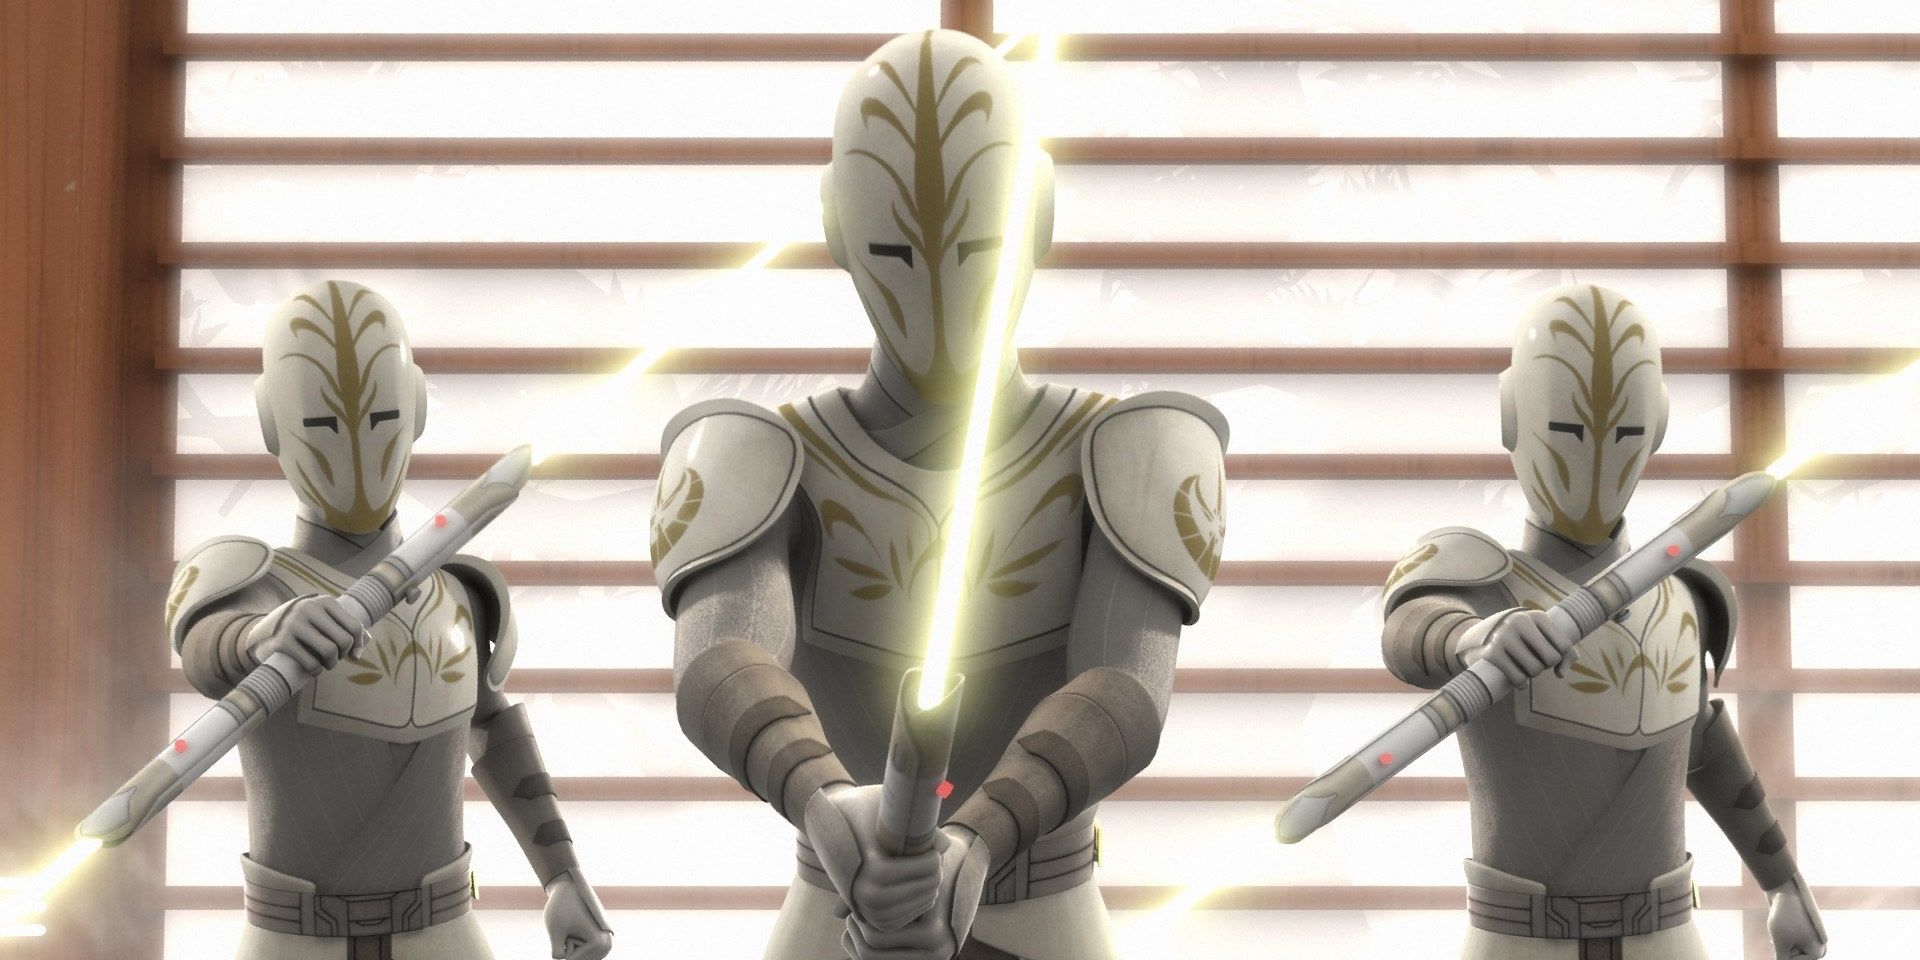 Jedi Temple Guards in Star Wars Rebels